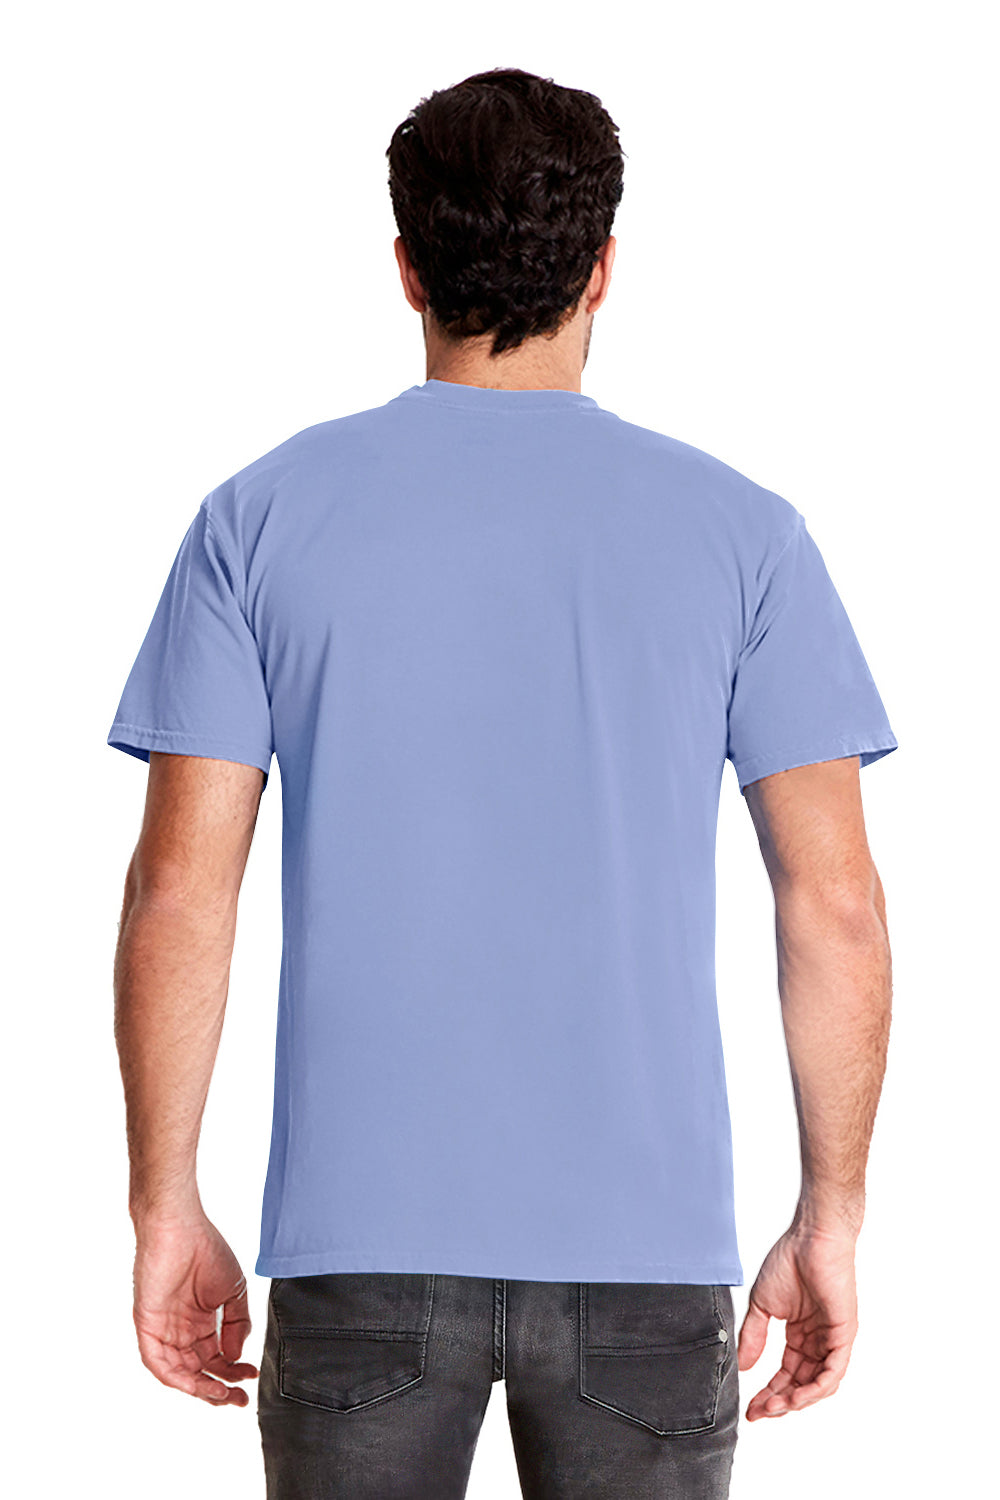 Next Level 7415 Mens Inspired Dye Jersey Short Sleeve Crewneck T-Shirt w/ Pocket Periwinkle Blue Back